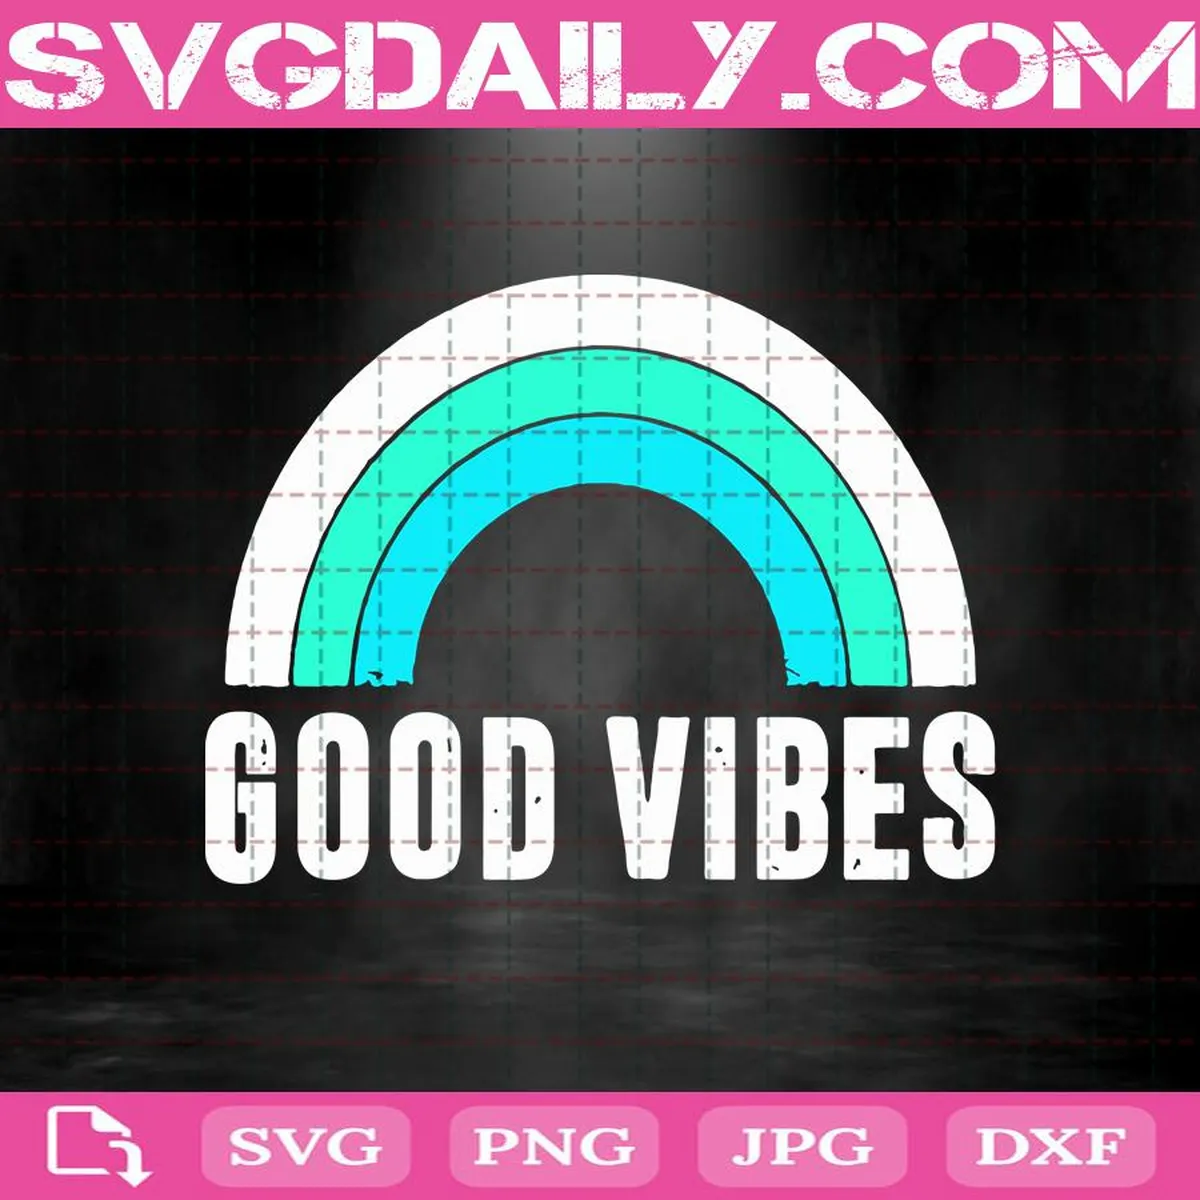 Good Vibes Svg, Distressed Good Vibes Svg, Distressed Rainbow Svg, Good Vibes Only Svg, Good Vibes Summer Svg